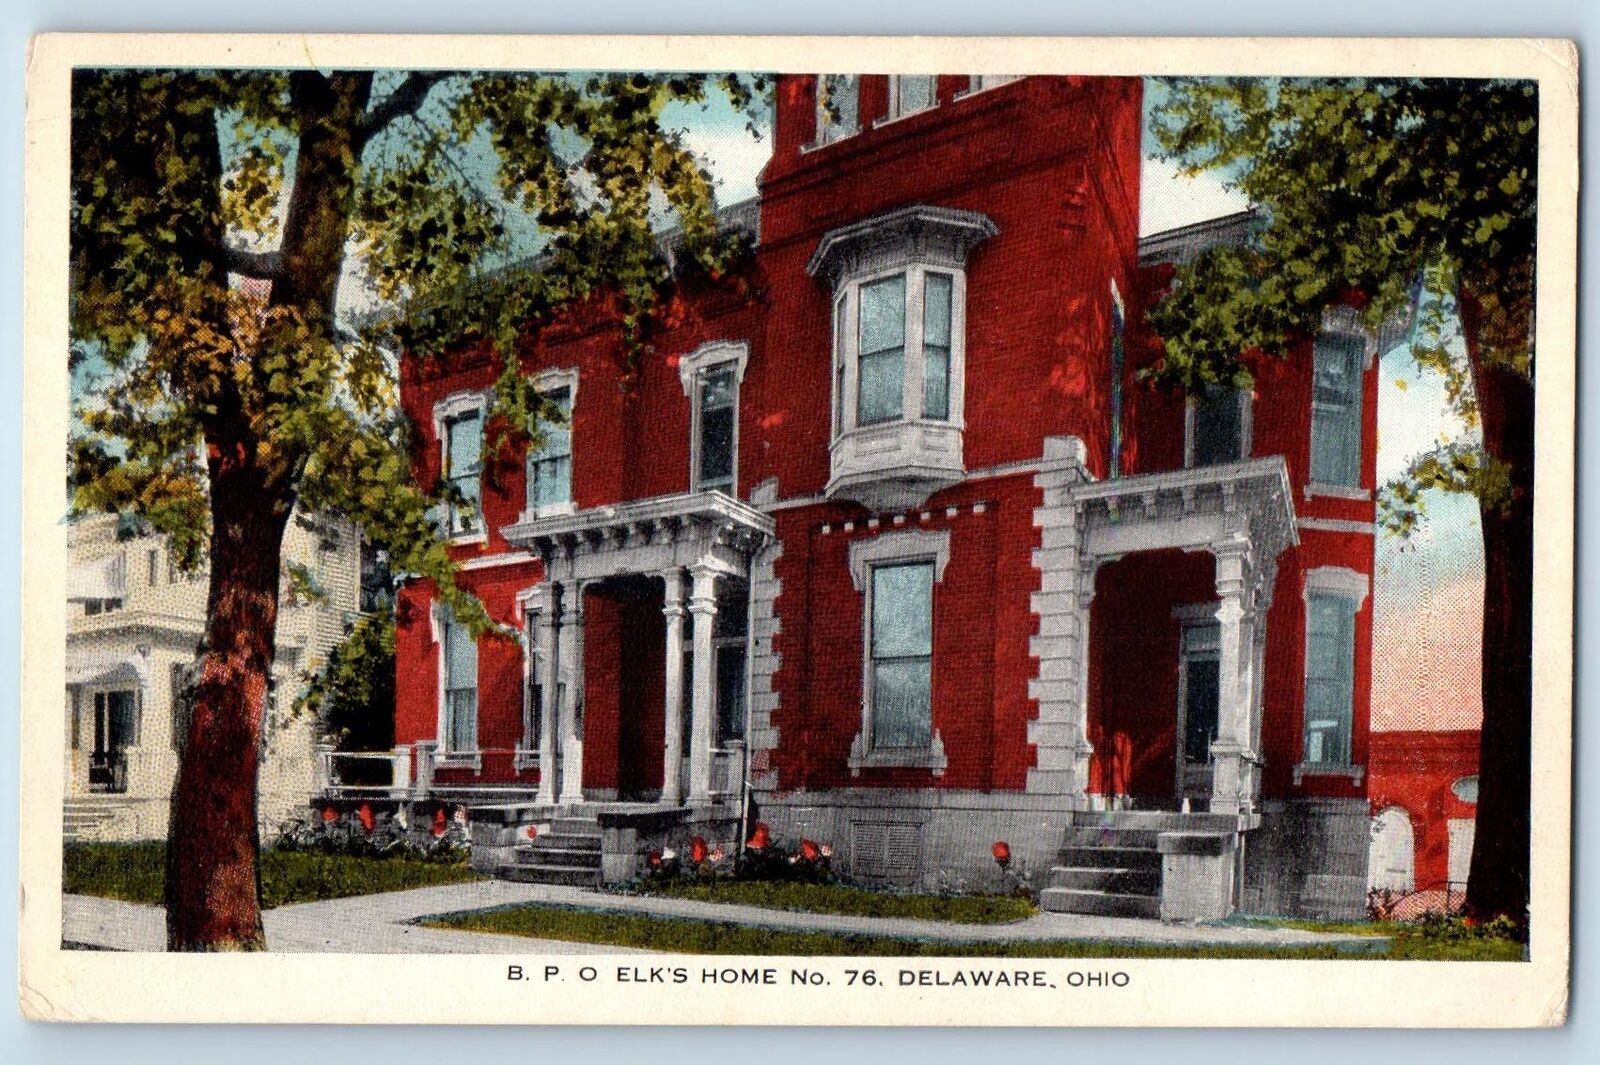 Delaware Ohio OH Postcard BPO Elk's Home No. 76 Building Exterior c1910s Antique